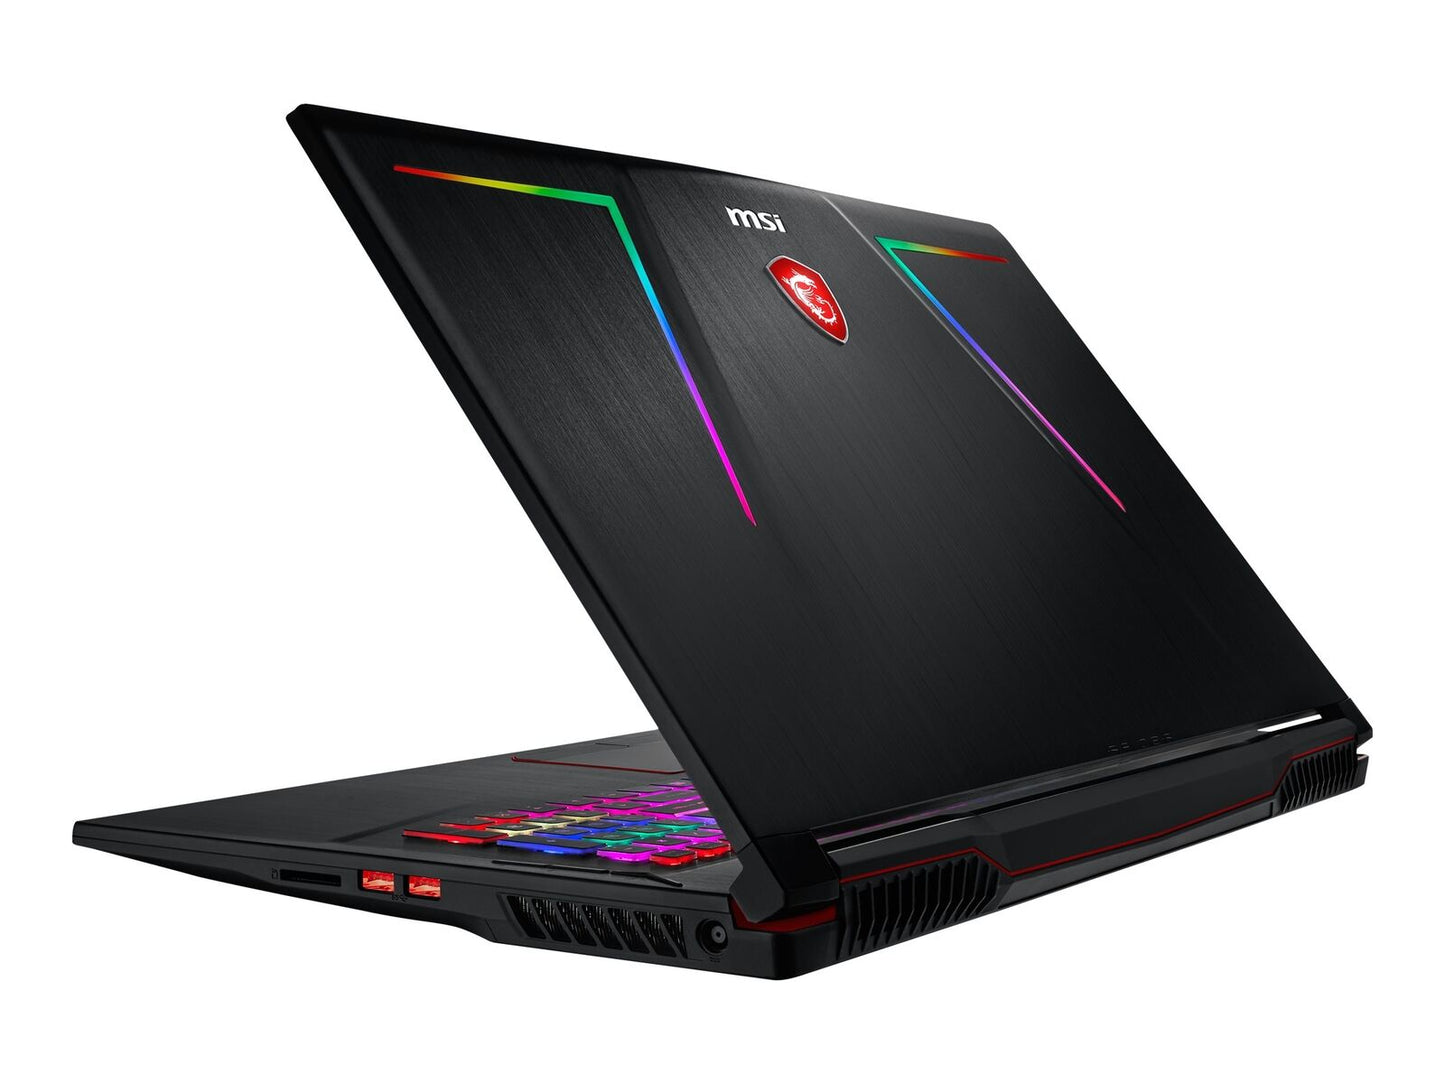 MSI GE73 Gaming Laptop 17.3", Intel Core i7-8750H, NVIDIA GeForce GTX 1060 6GB